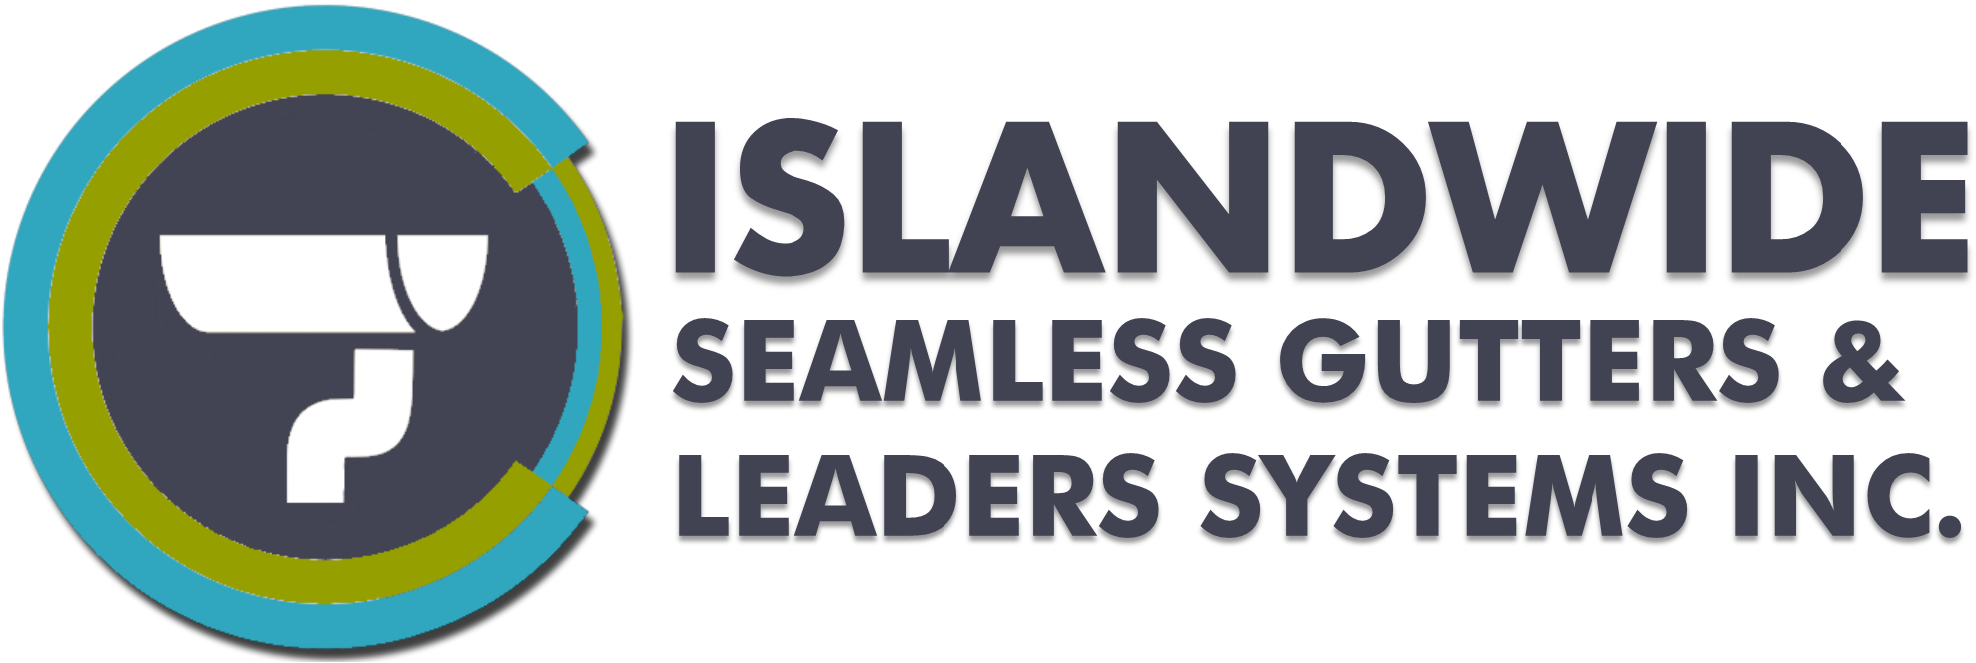 Islandwide Seamless Gutters & Leaders Systems